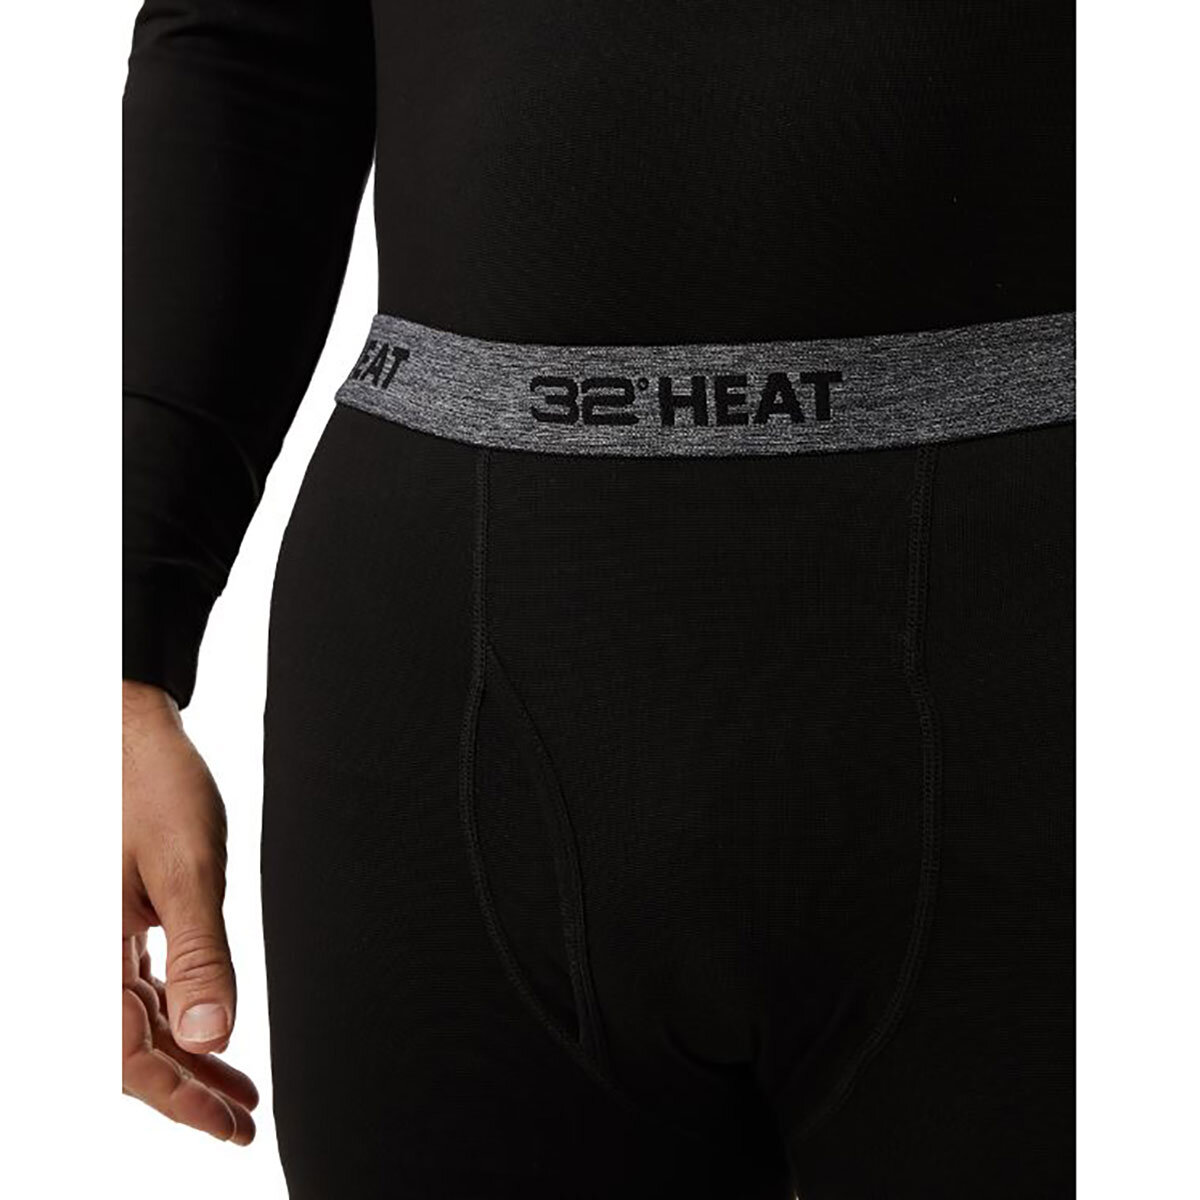 32 Degrees Men's Heat Pant, 2 Pack